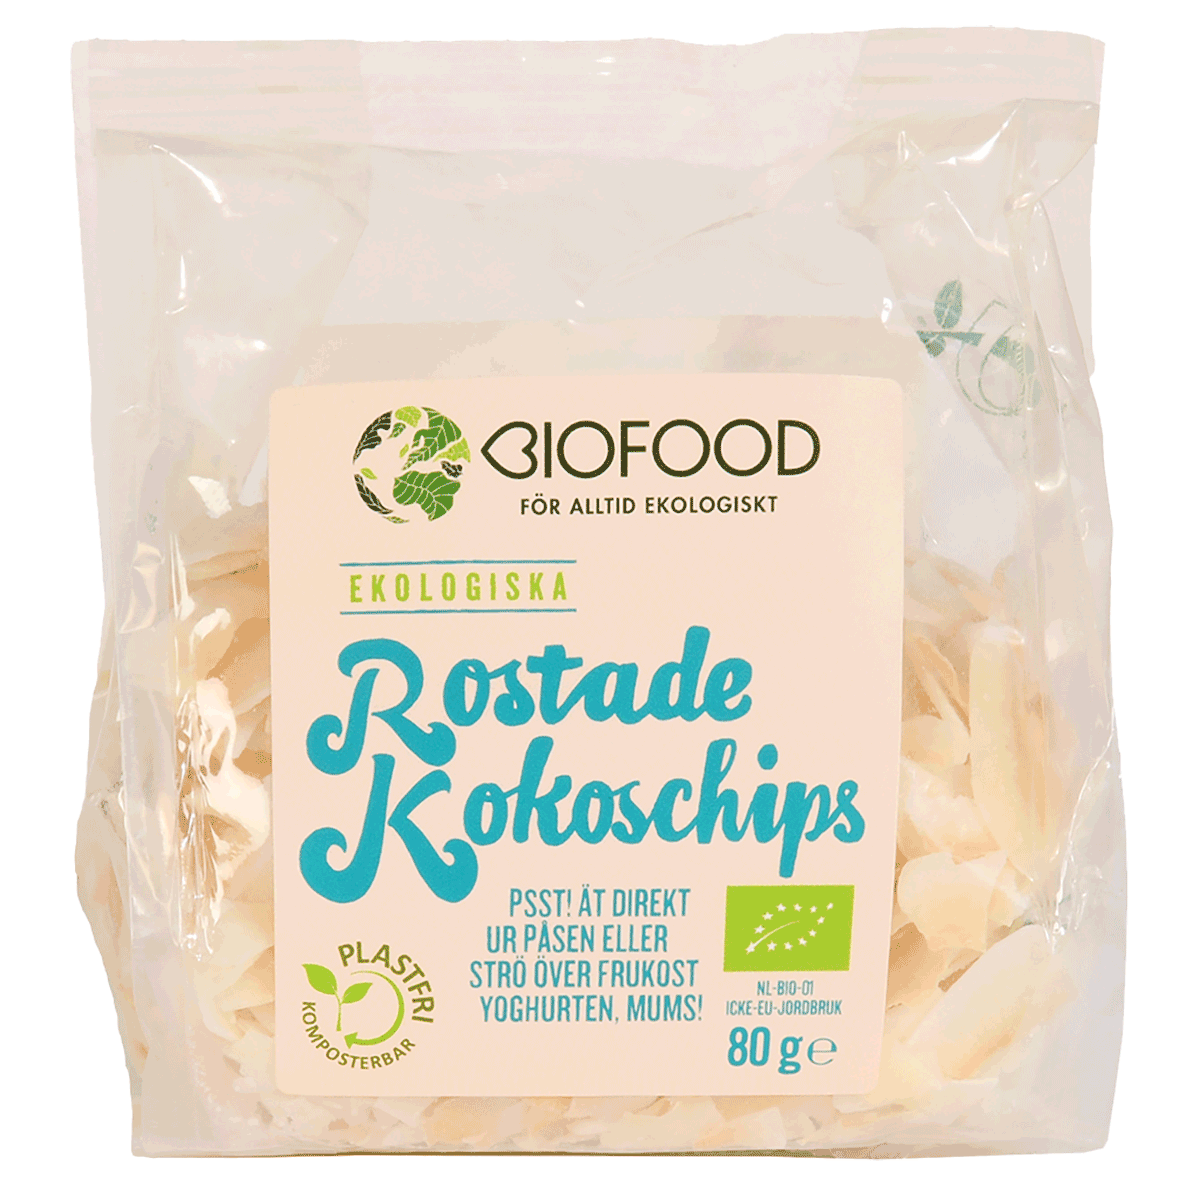 Biofood's Kokoschips Rostade'